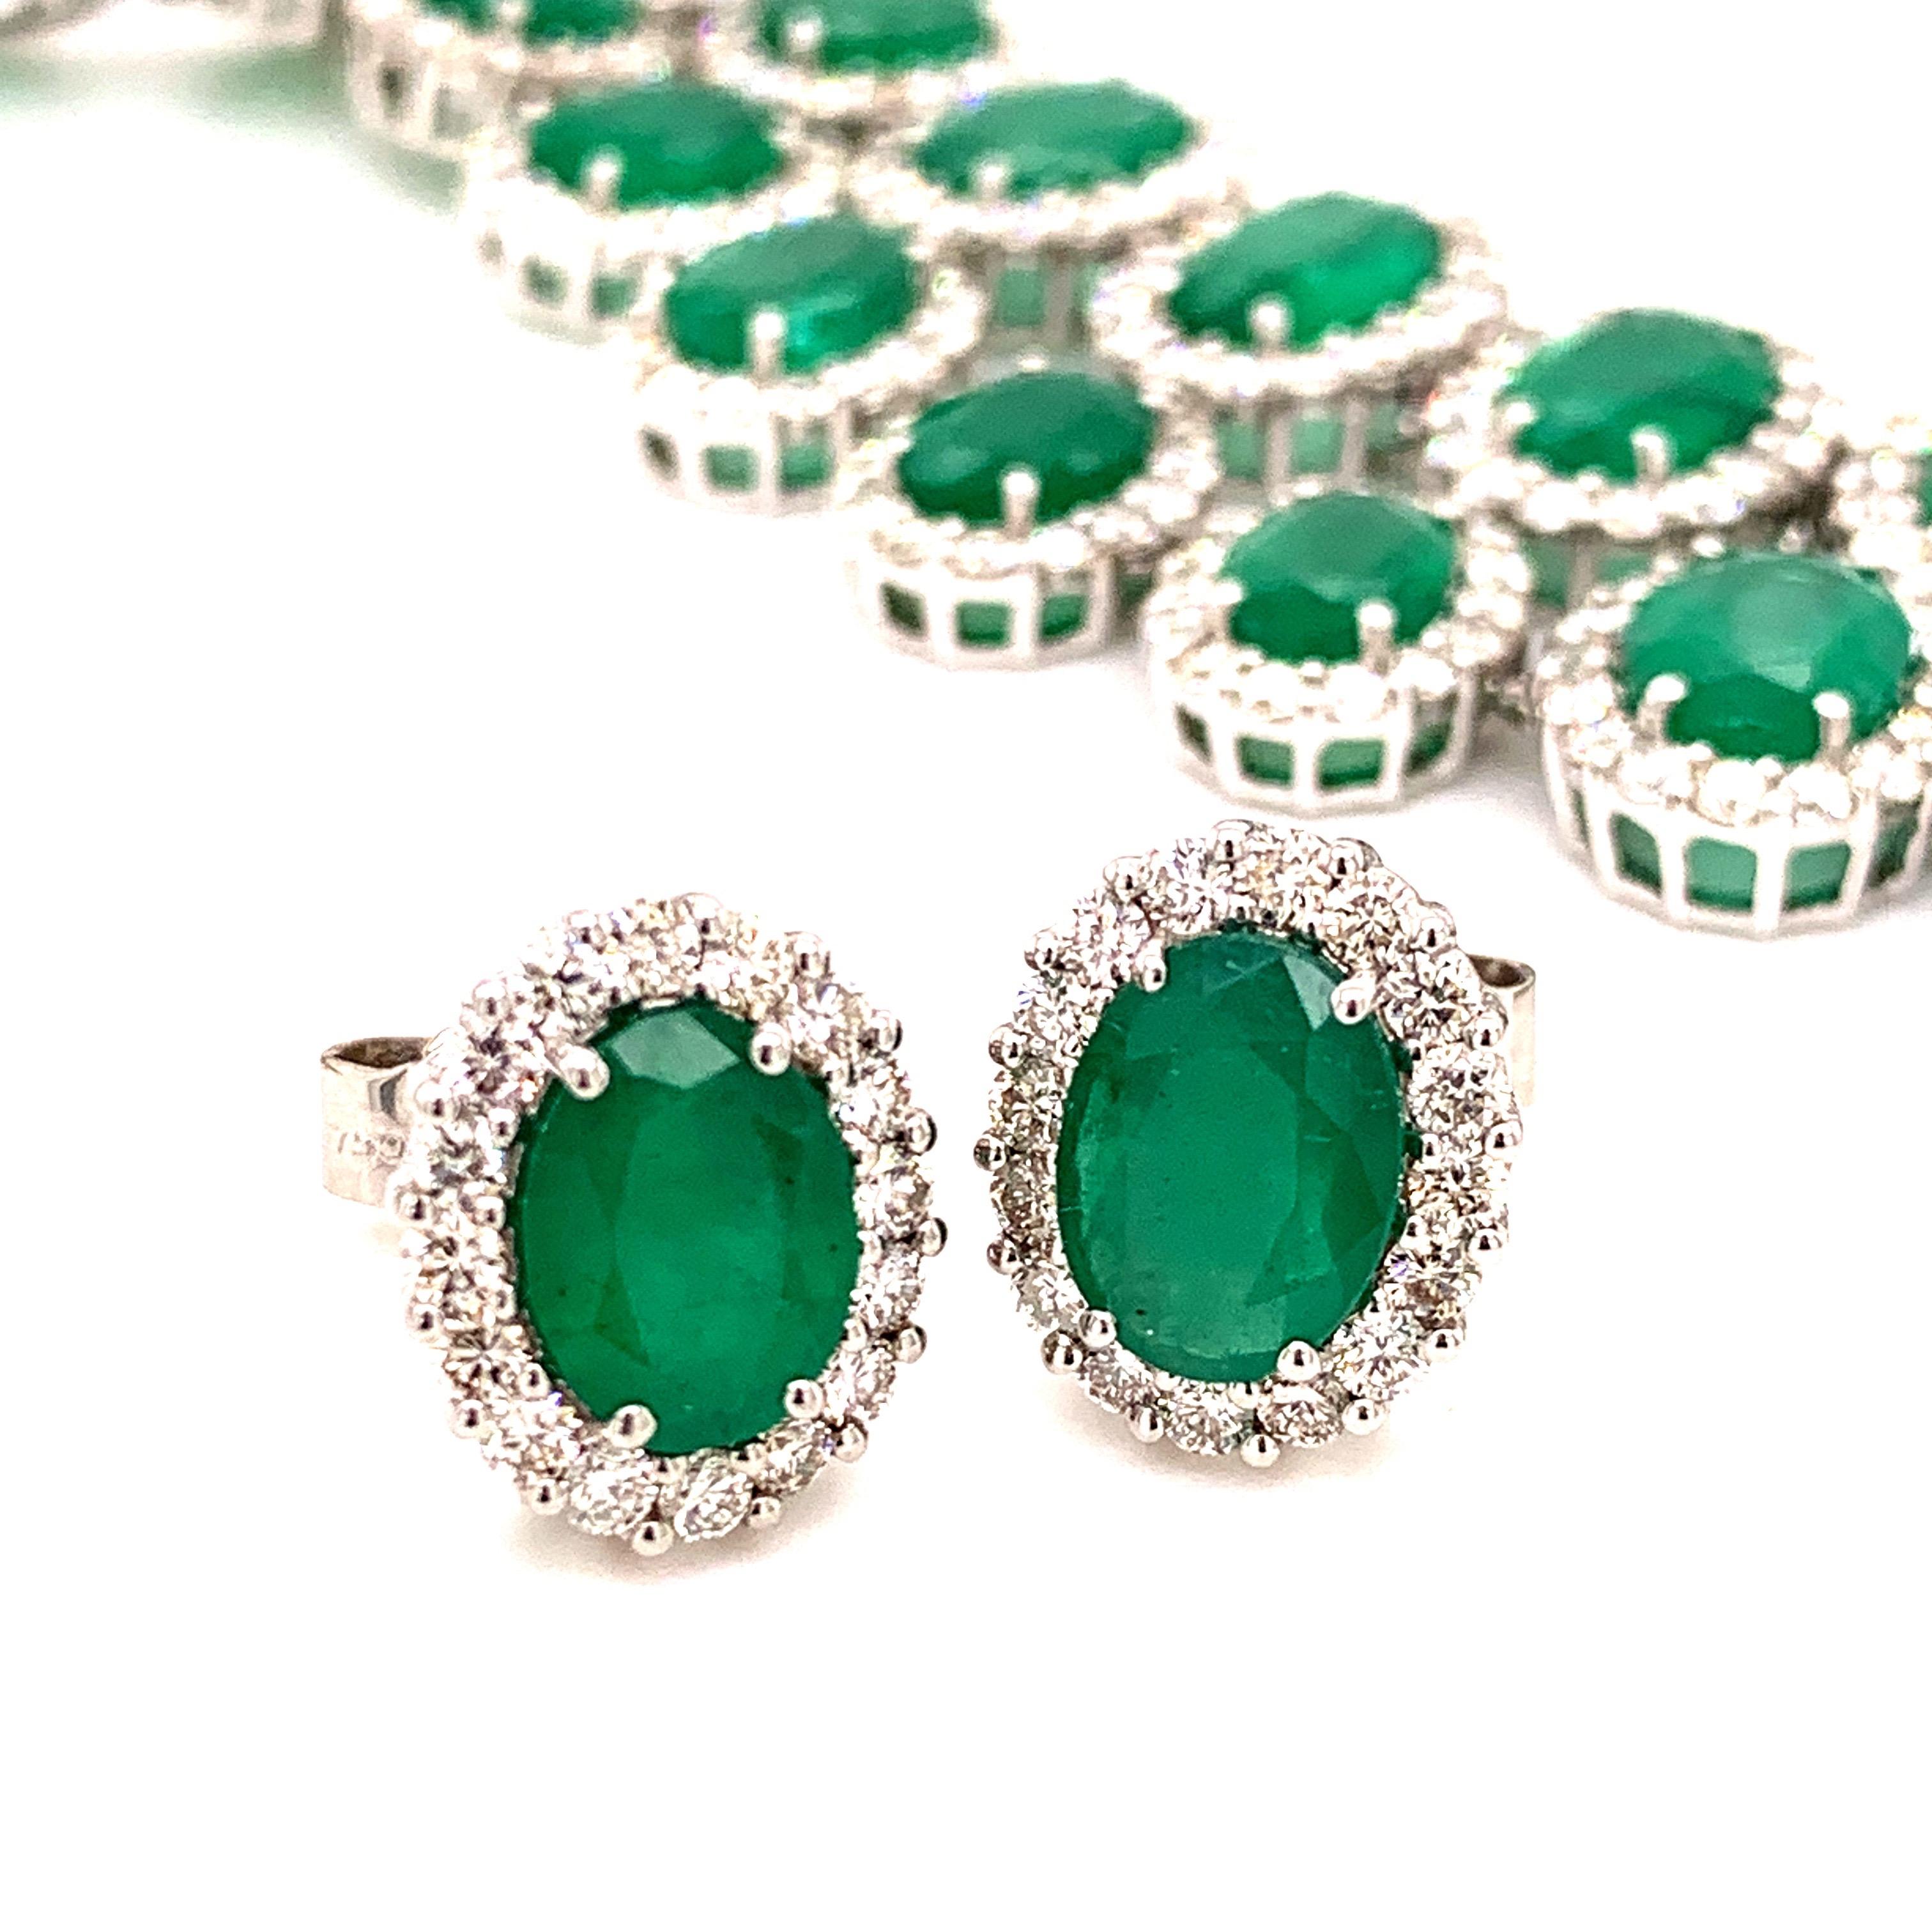 Contemporary 37.73 Carat Emerald Necklace Earrings Set